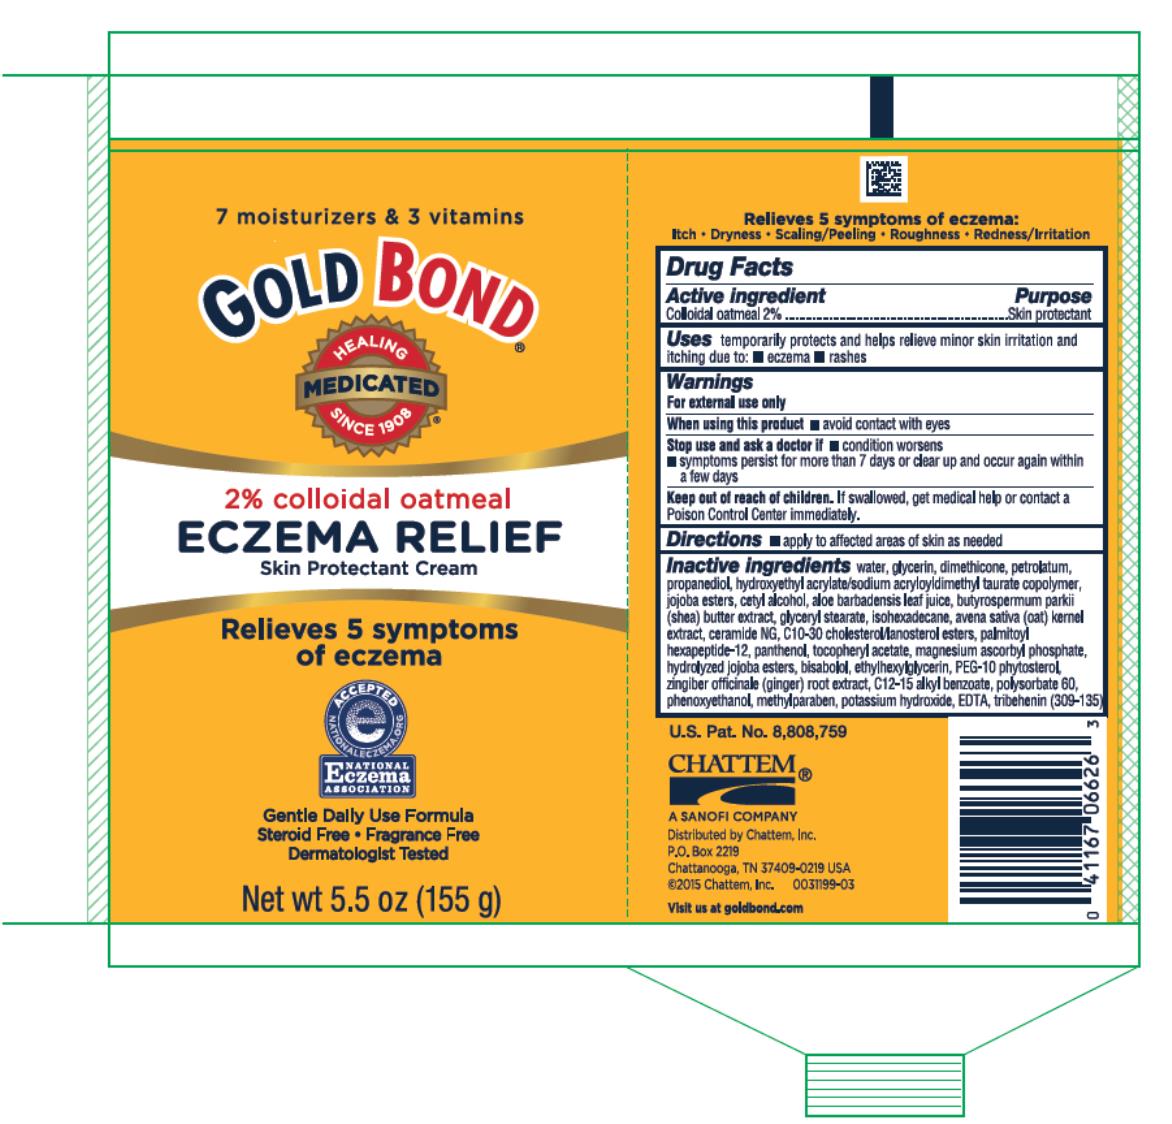 7 moisturizers & 3 vitamins
GOLD BOND® 
2 % colloidal oatmeal
ECZEMA RELIEF
Skin Protectant Cream
Net wt 5.5 oz (155 g)
